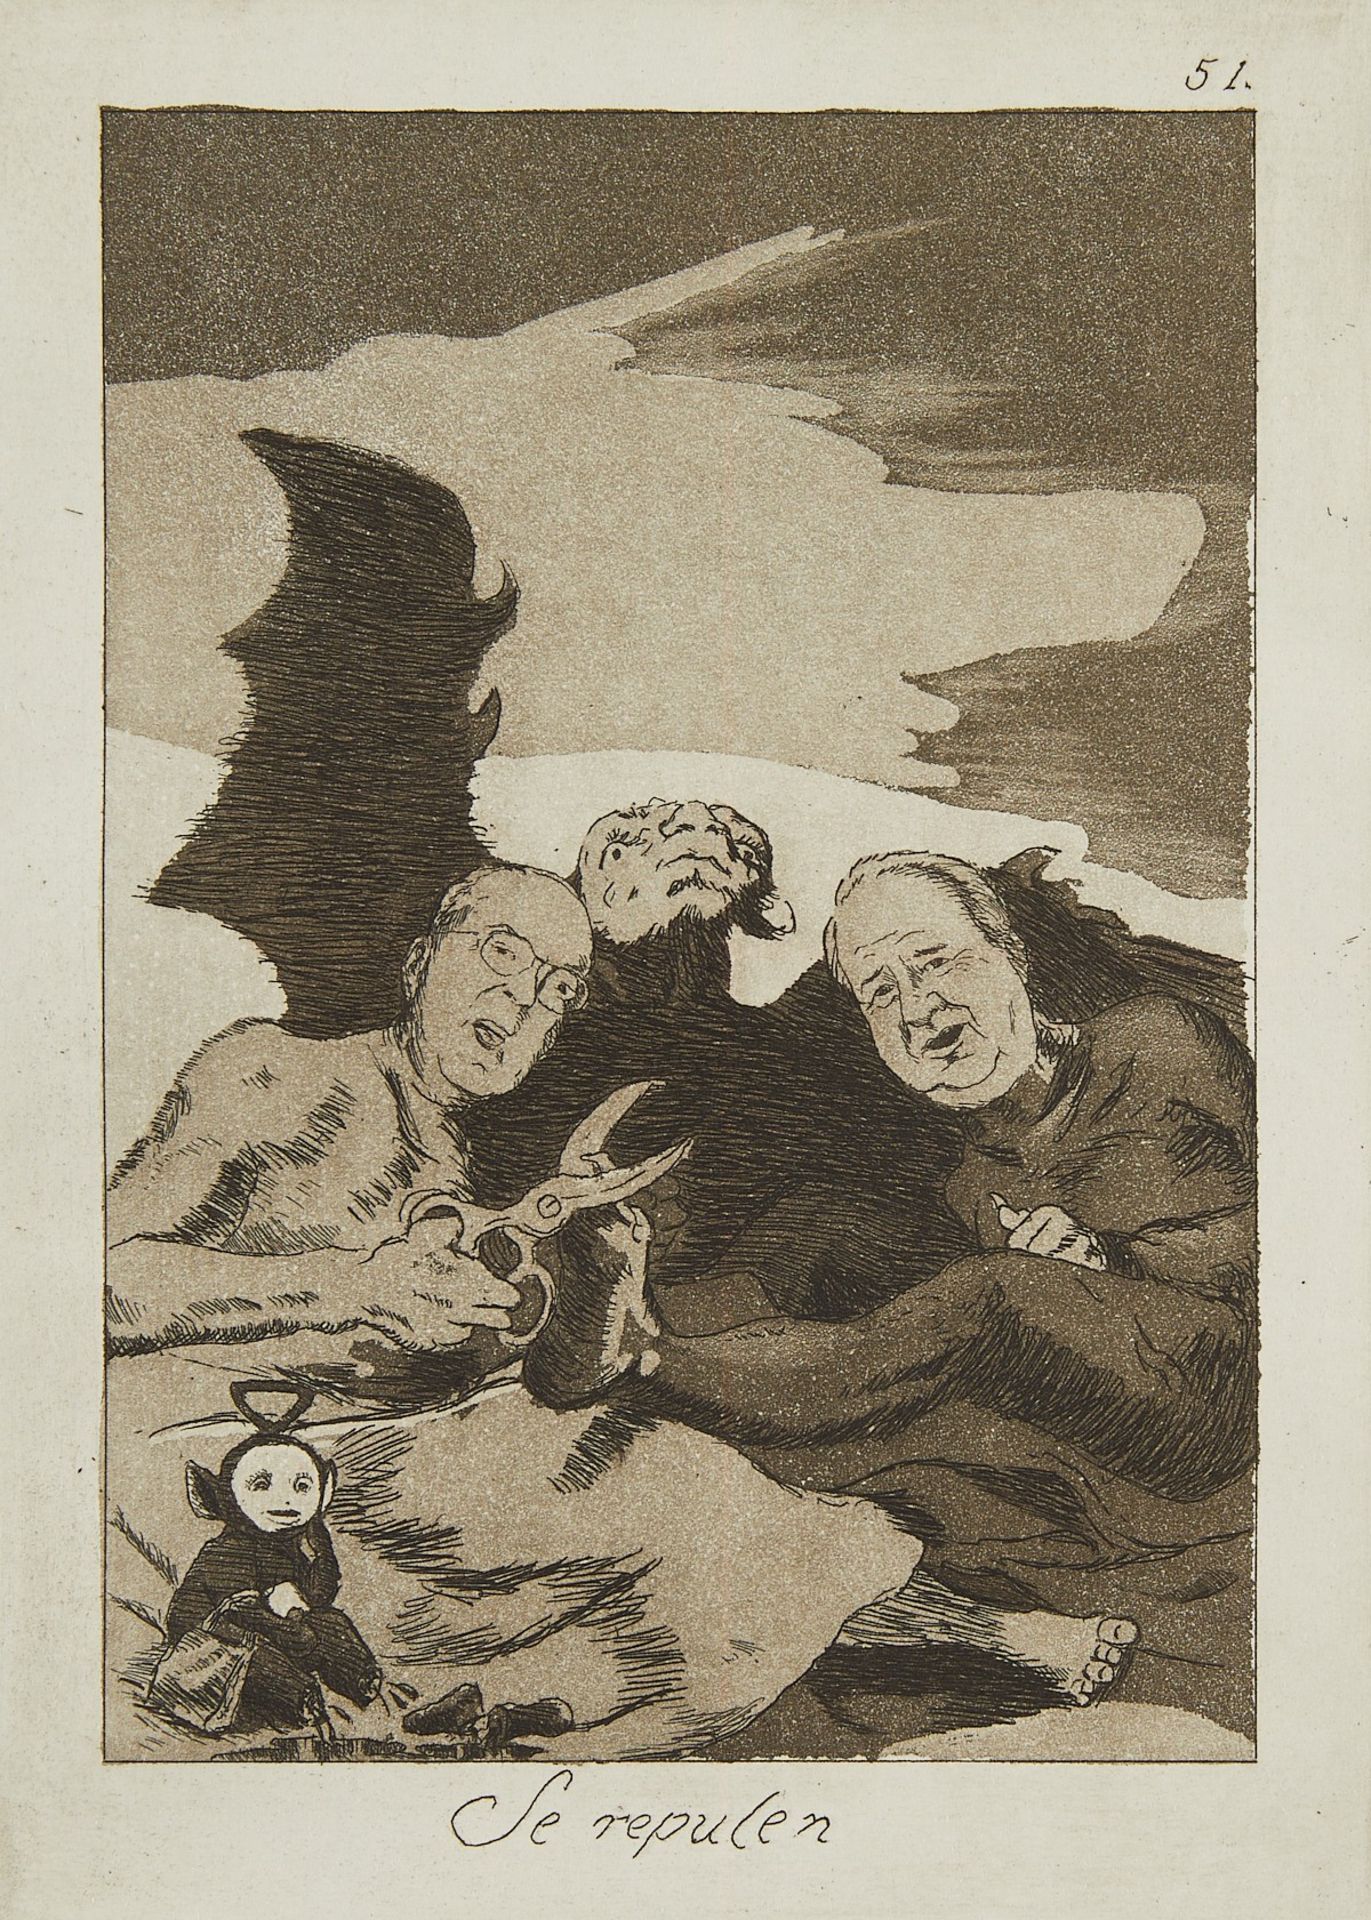 Grp: 8 Chagoya "Return To Goya's Caprichos" Suite - Image 7 of 40